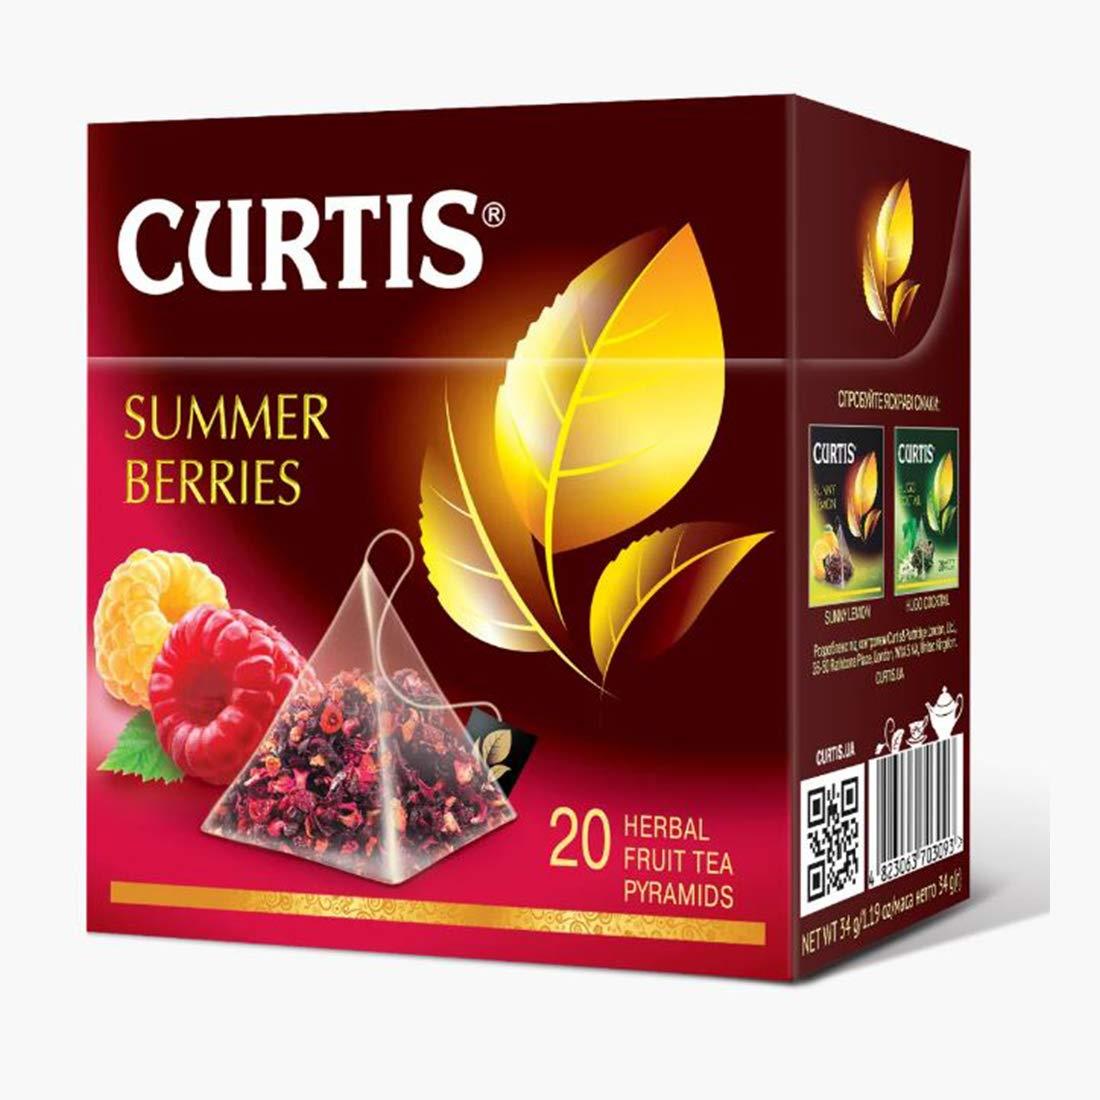 {Imported} Curtis Herbal Fruit Tea (Summer Berries, 20 tea pyramids)